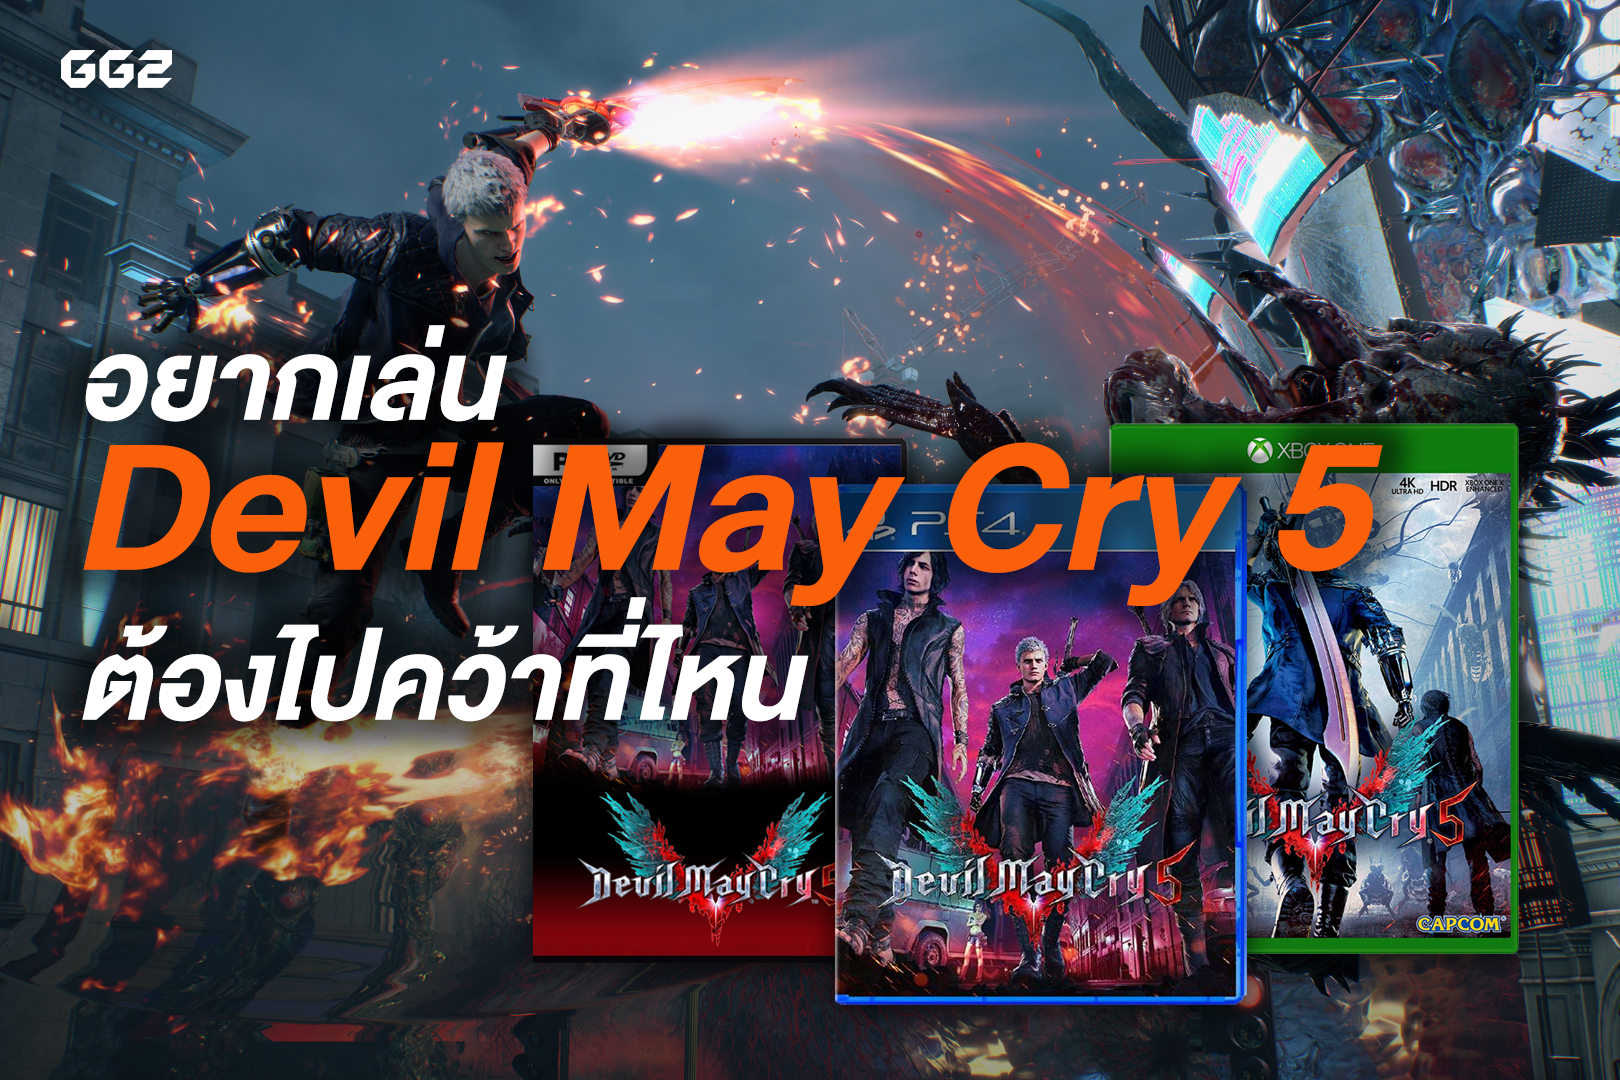 Devil may cry steam key generator 2019